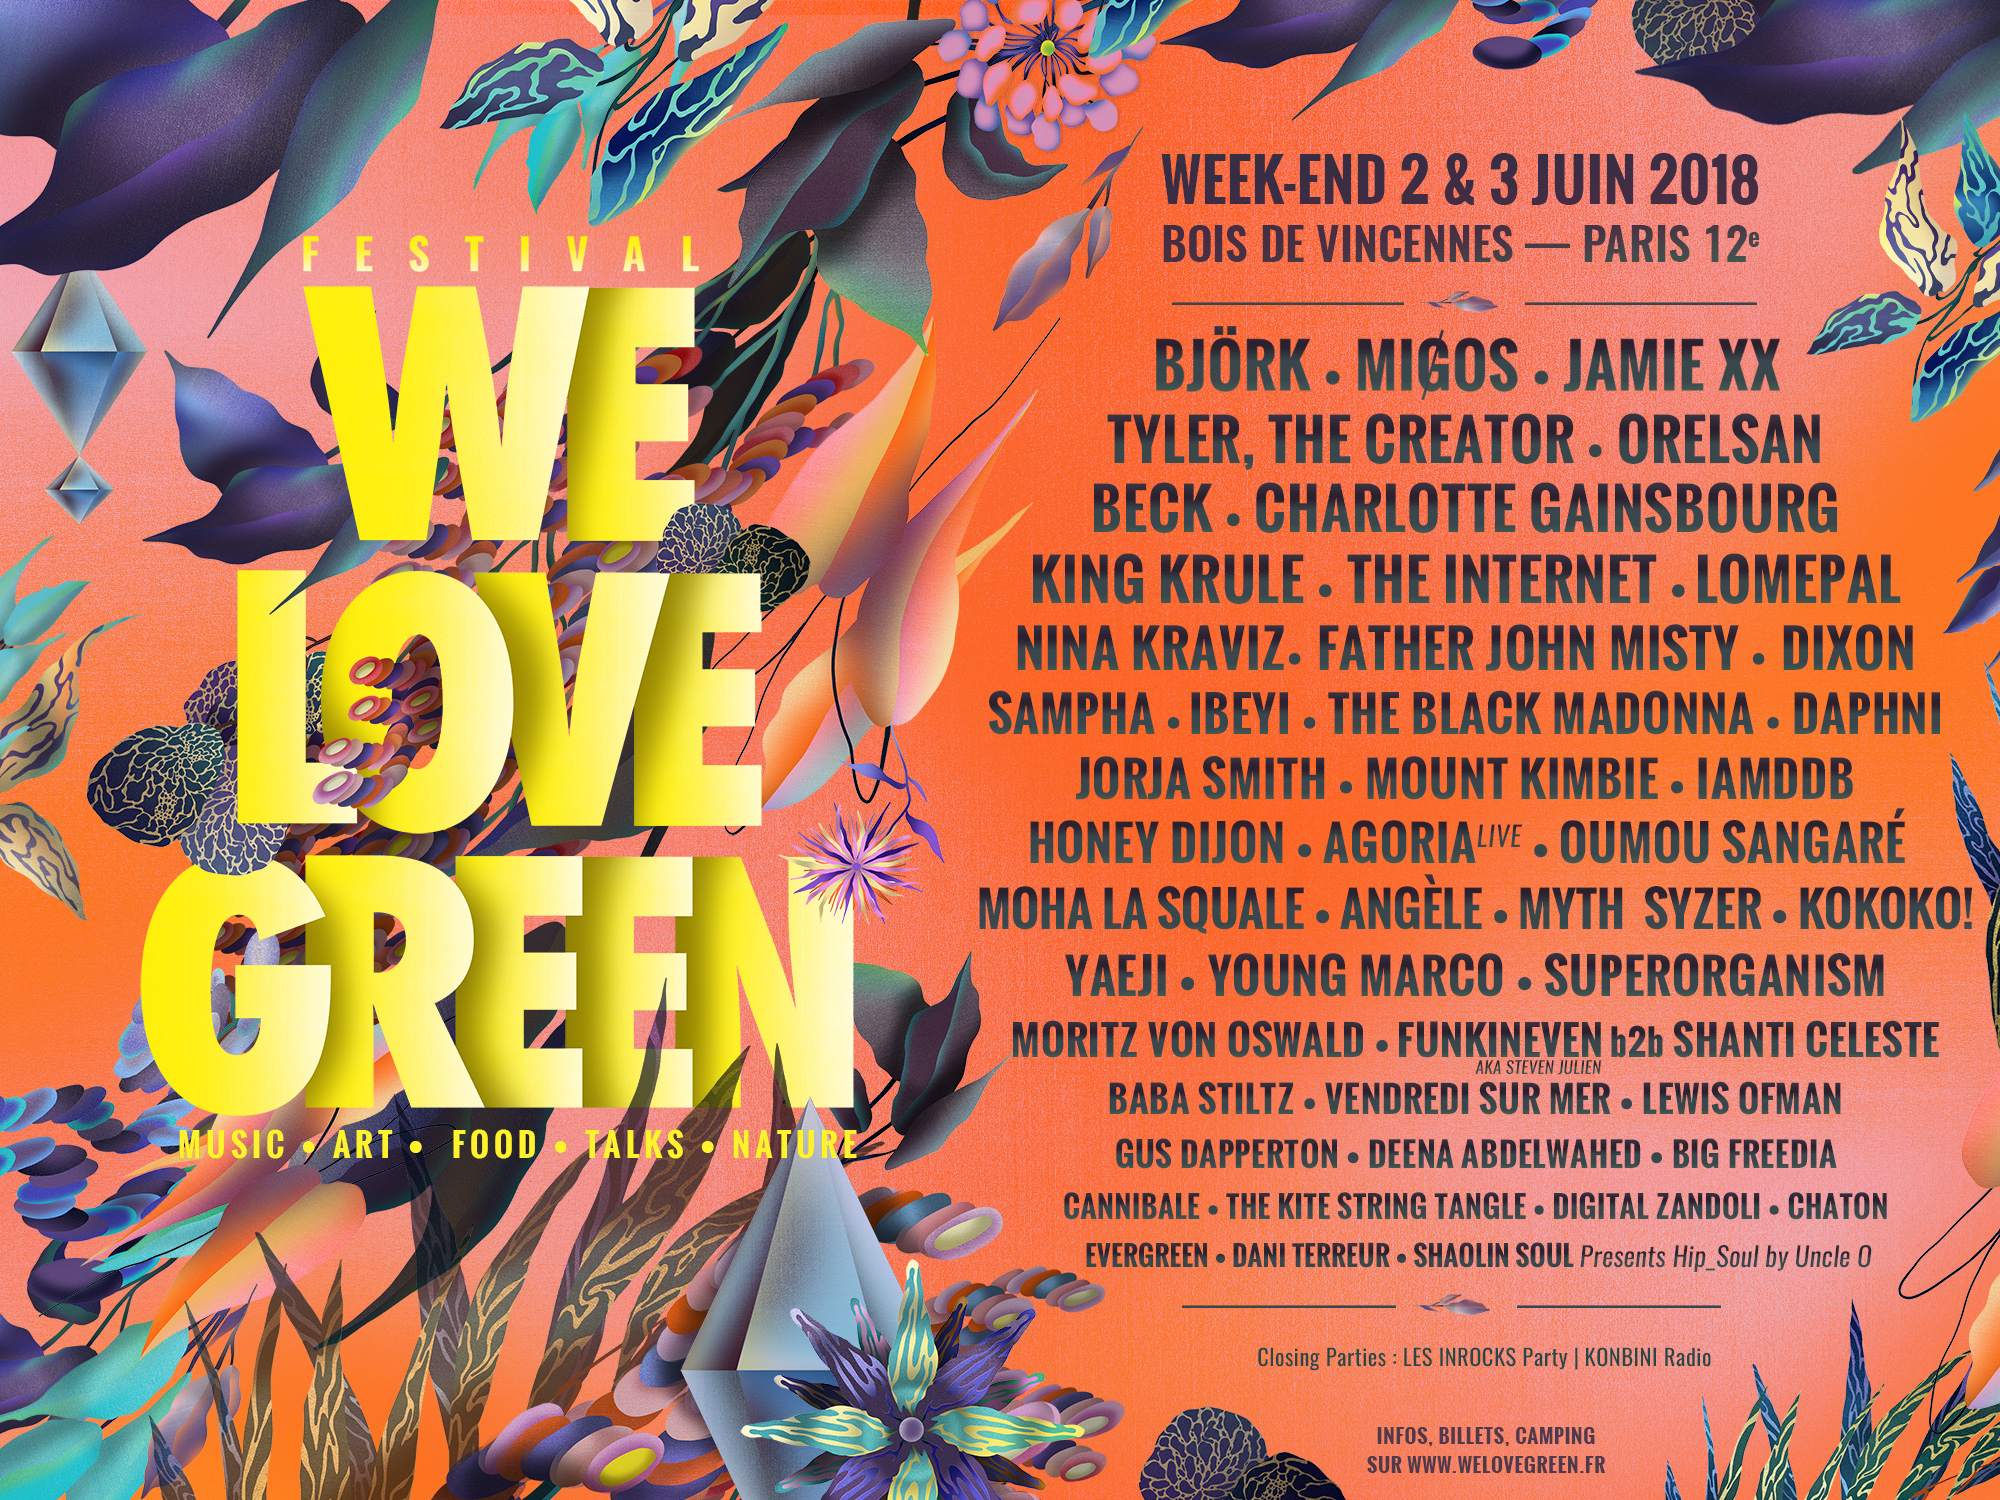 Nina Kraviz, Dixon, The Black Madonna added to We Love Green 2018 image